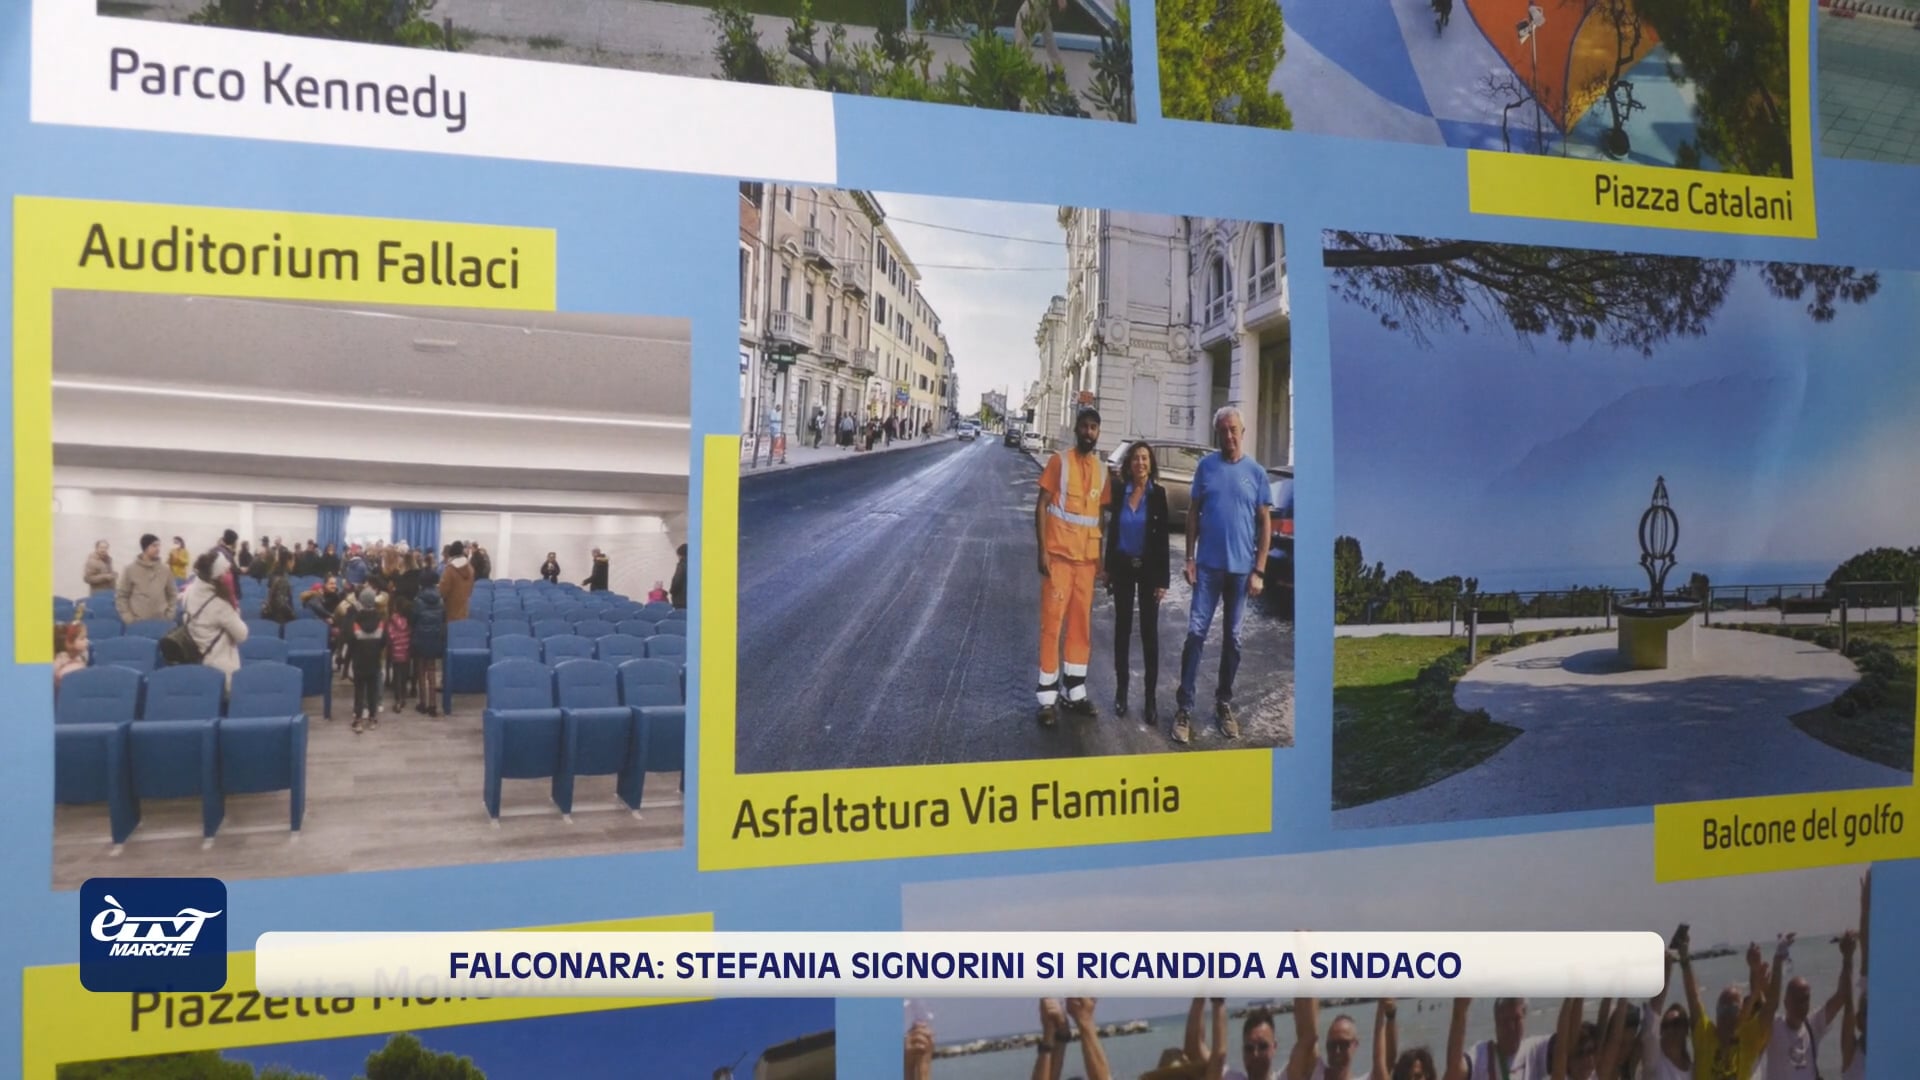 Falconara: Stefania Signorini si ricandida a sindaco - VIDEO